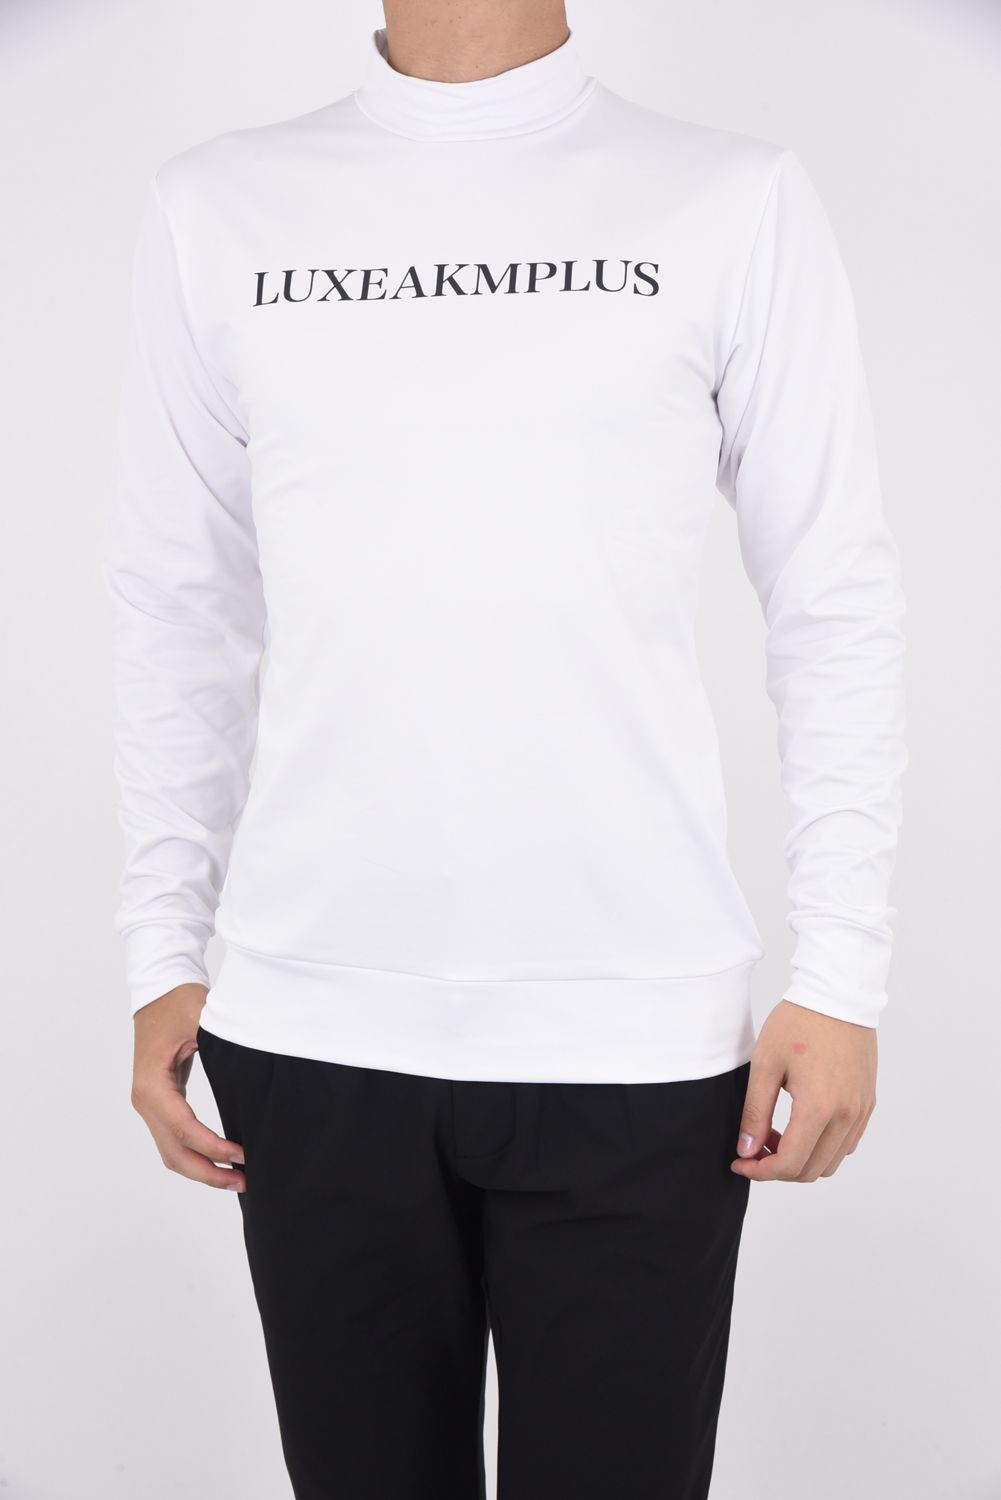 LUXEAKMPLUS - LUXE AKM PLUS LOGO HIGH NECK T-SHIRTS